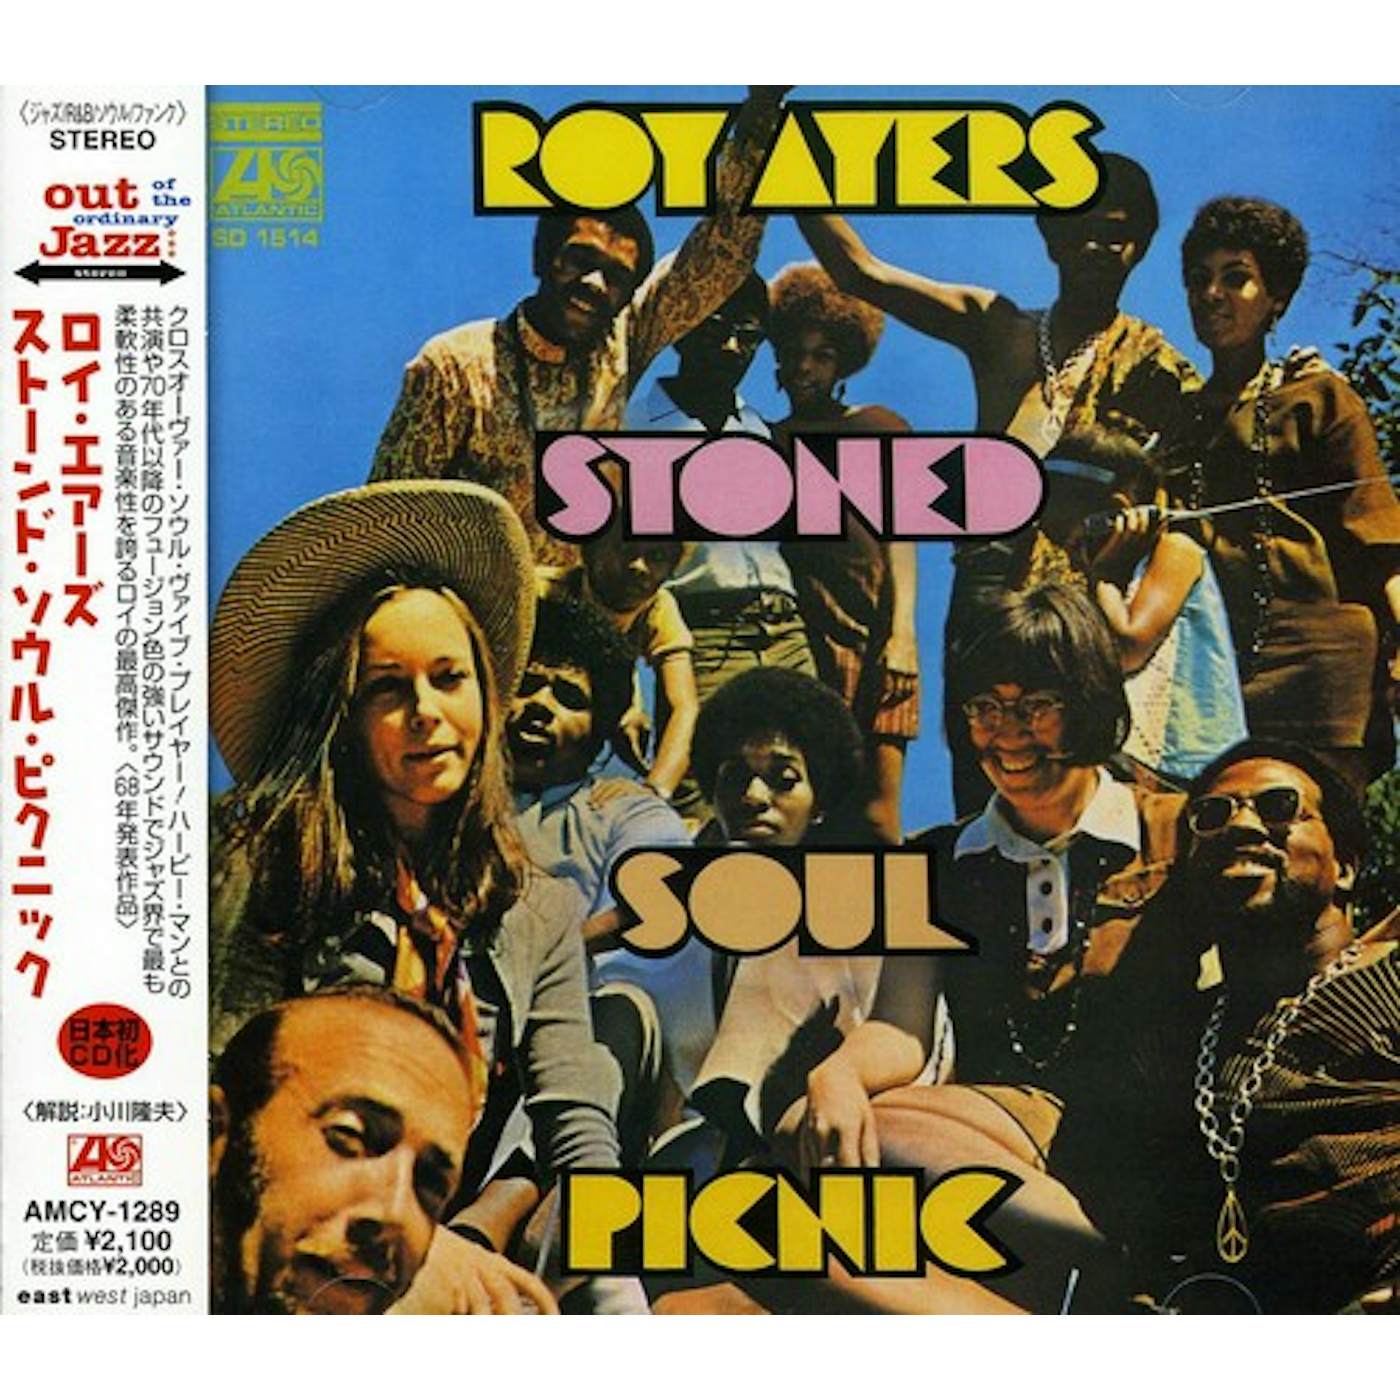 Roy Ayers STONED SOUL PICNIC CD